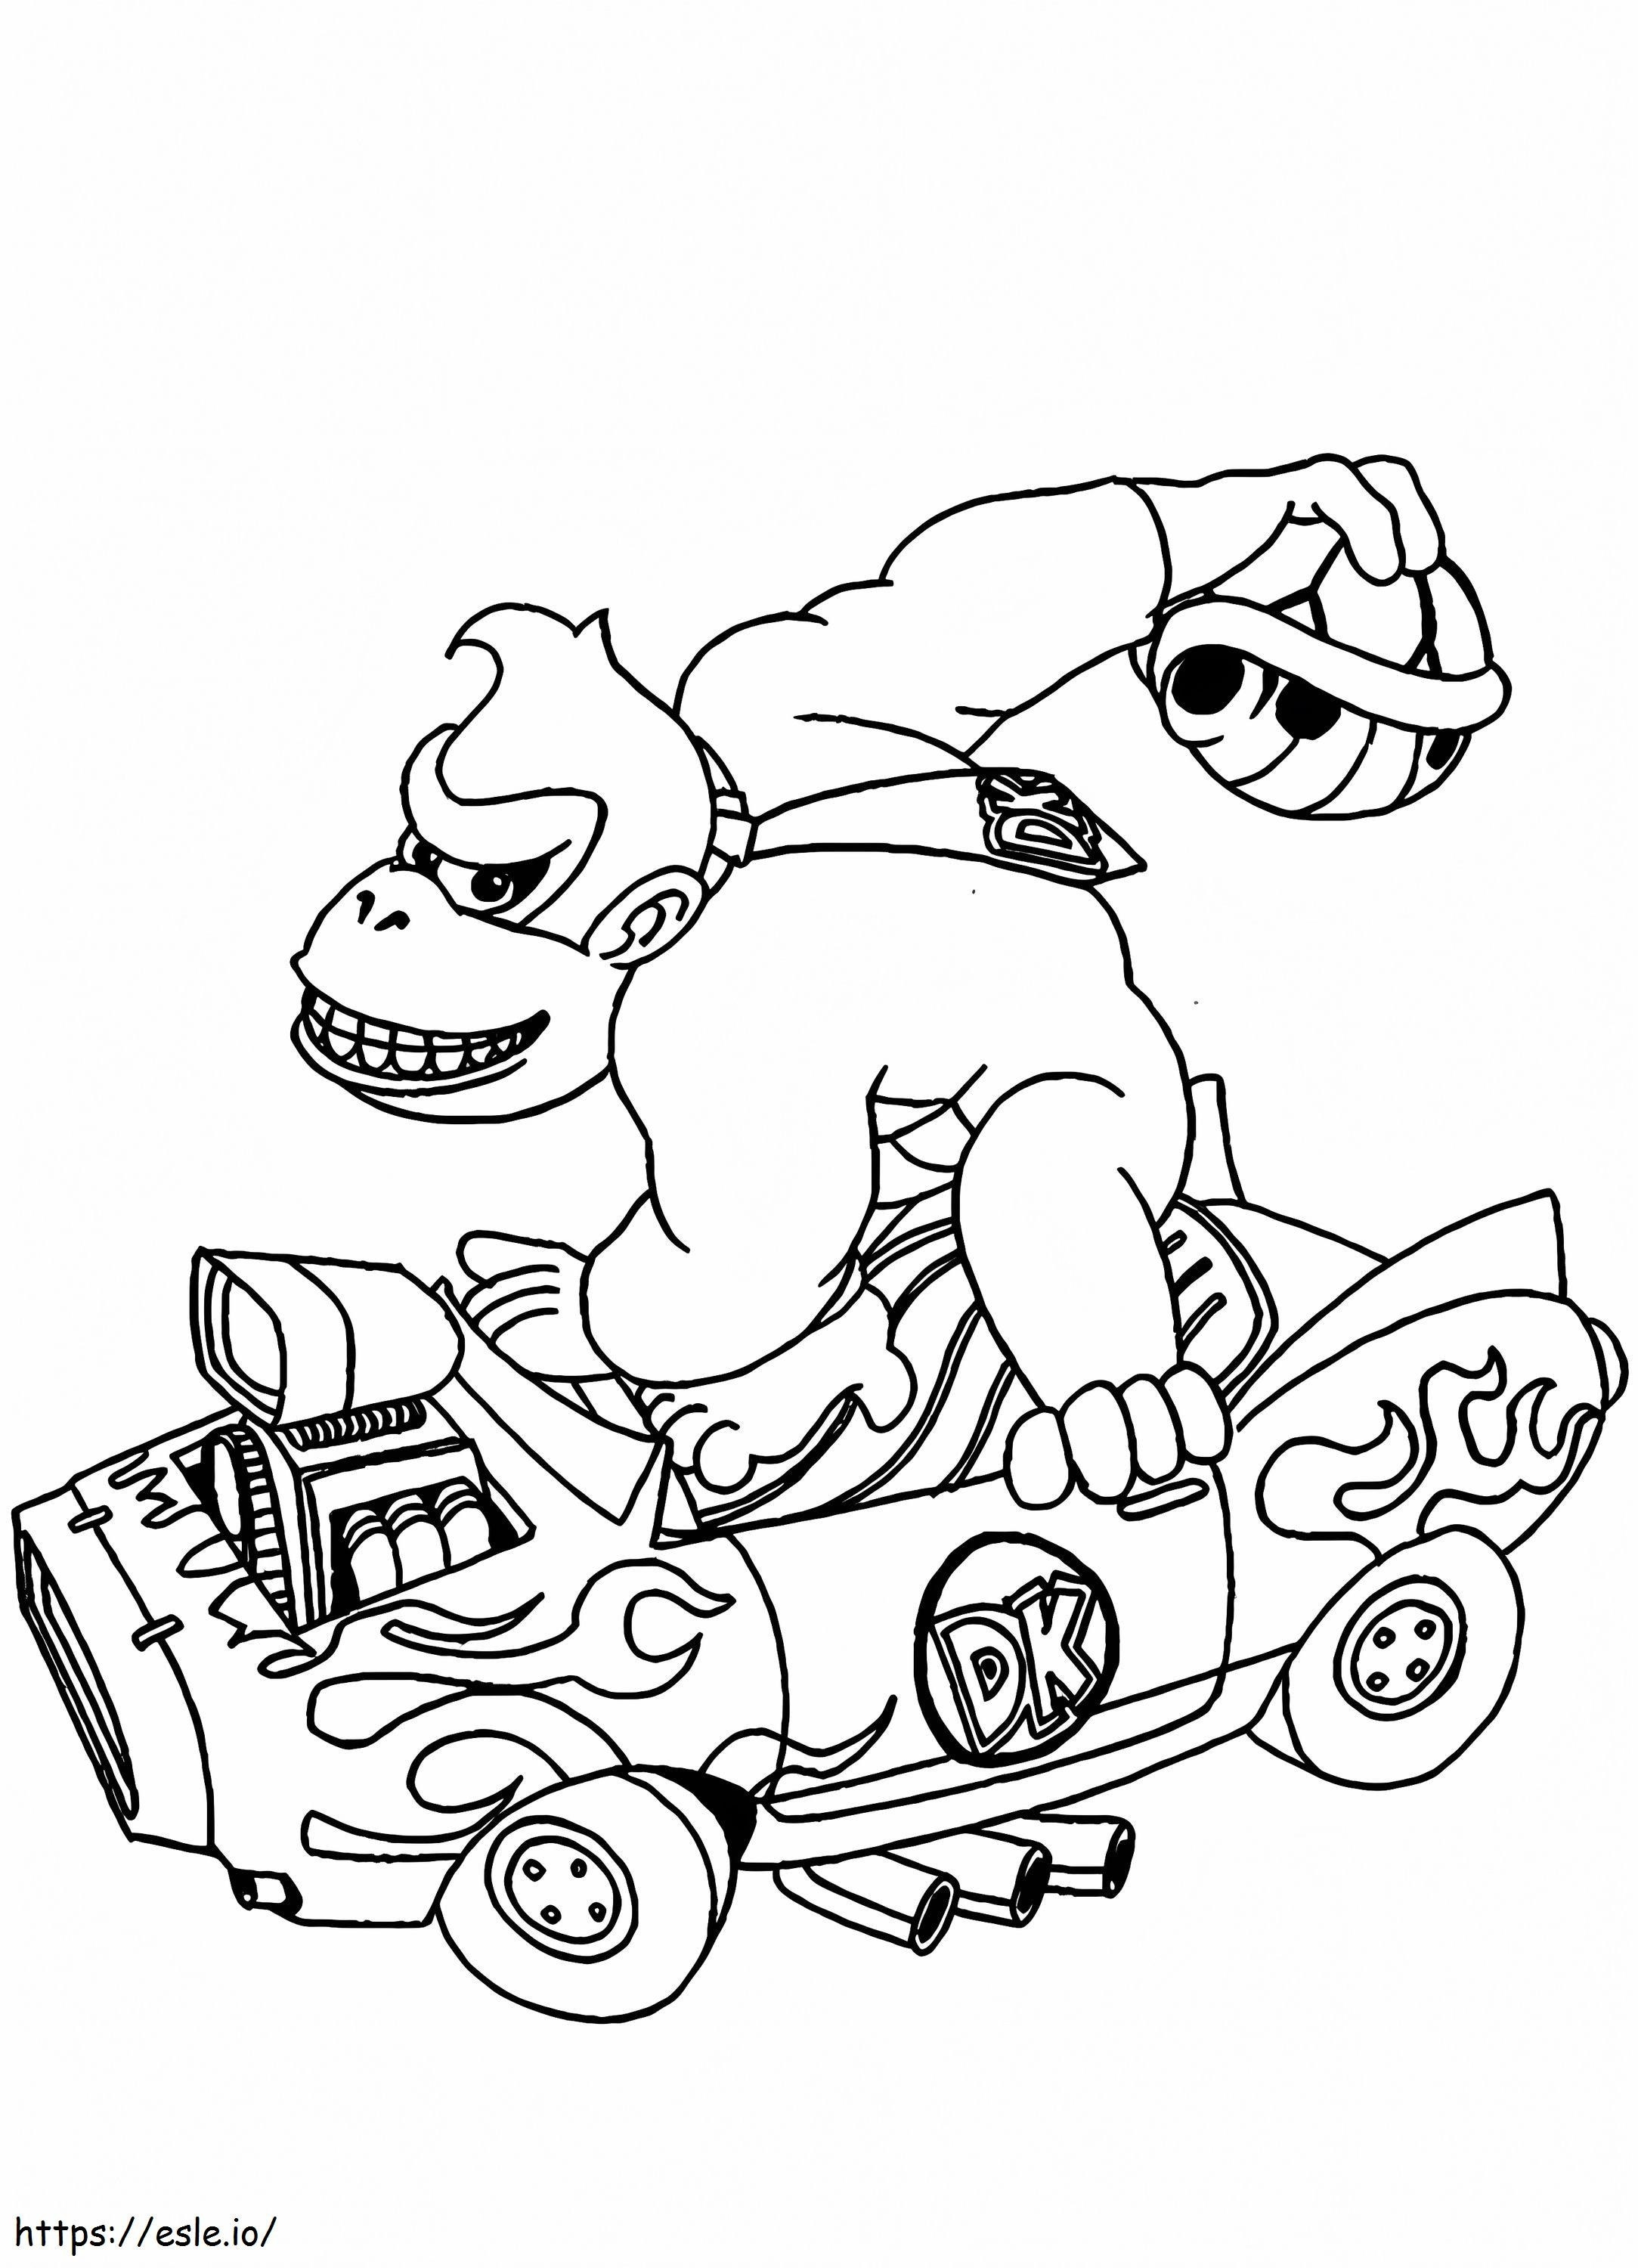 Donkey Kong dirige um carro para colorir